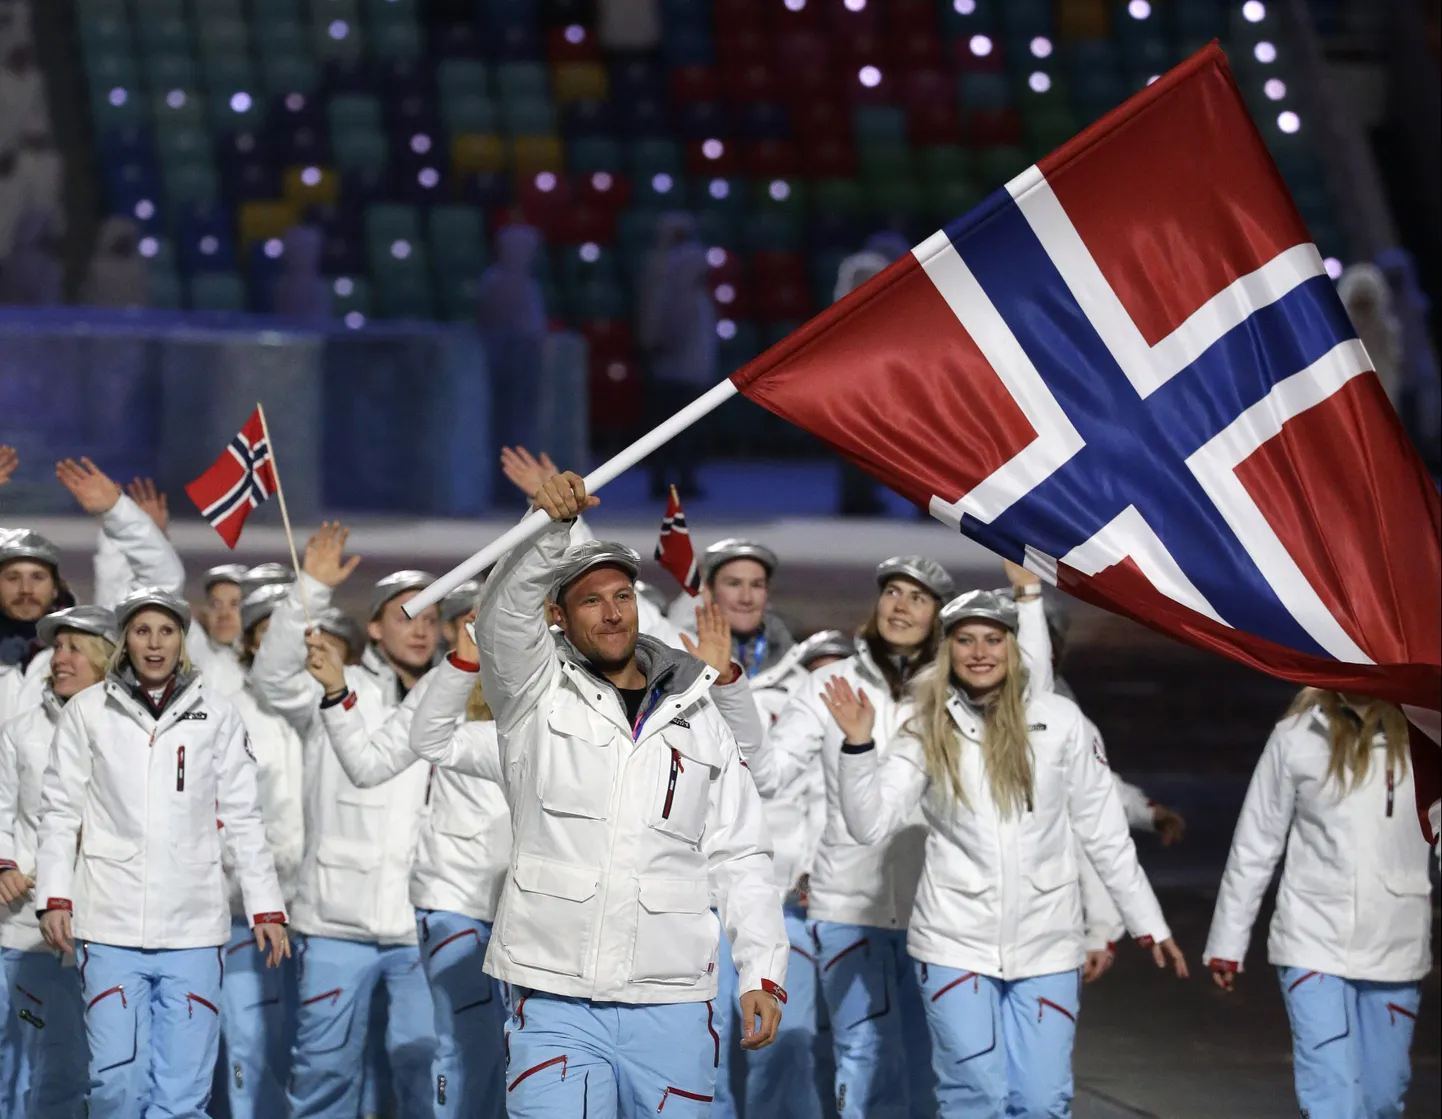 Аксель Лунд Свиндаль с флагом Норвегии на открытии Олимпиады.